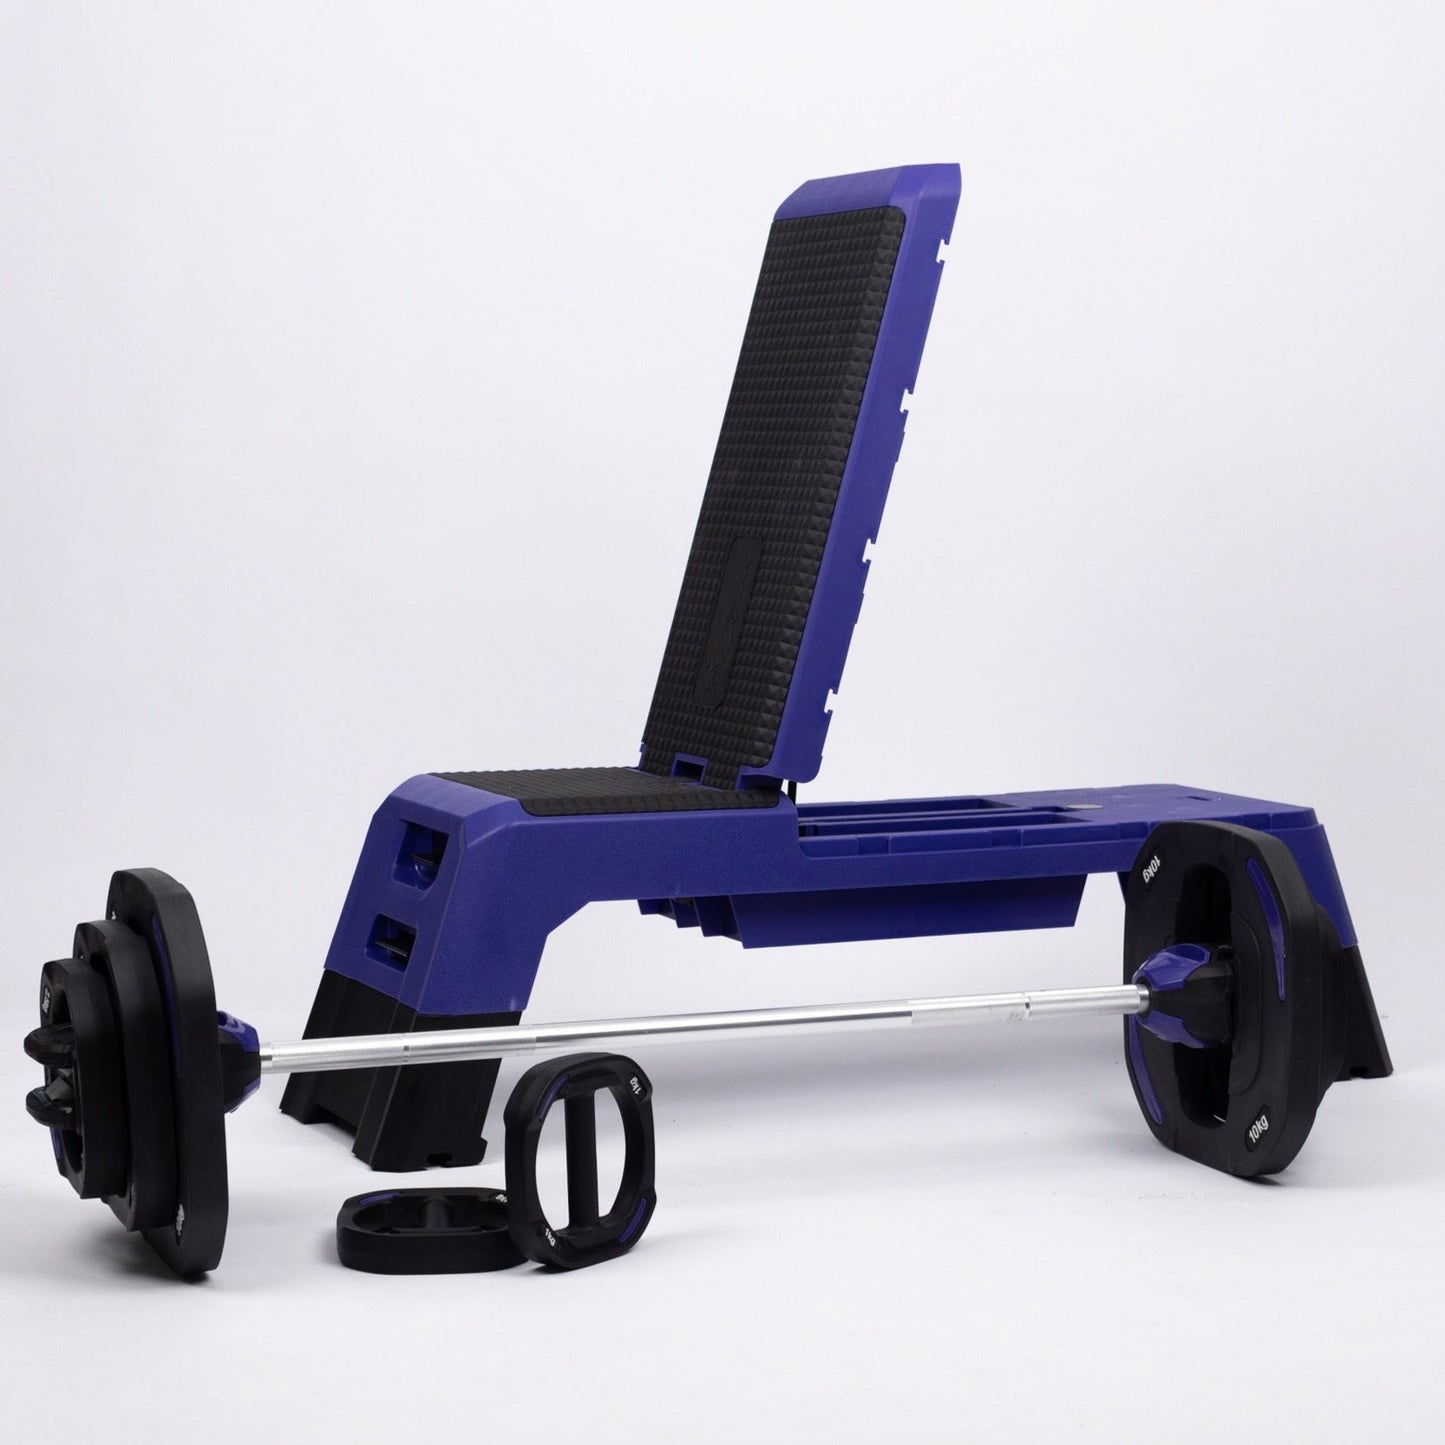 Adjustable Stepper and Pump Set combo - The Pilates Shop